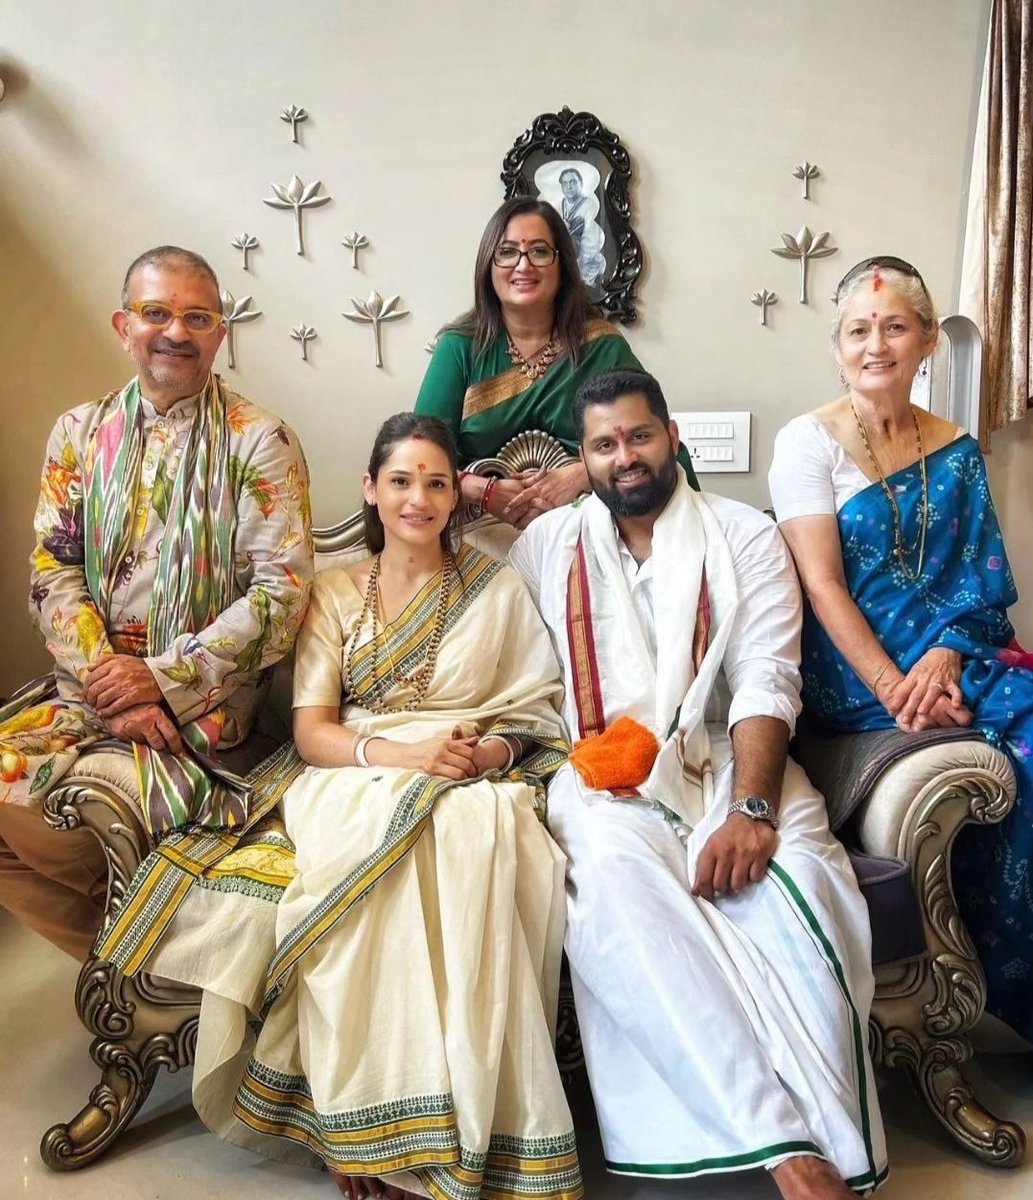 A perfect family picture🤩
@sumalathaA #AbishekAmbareesh #AvivaBidappa

#Sandalwoodfilmsupdate #Kannadafilmindustry #KFI #abishekambareesh